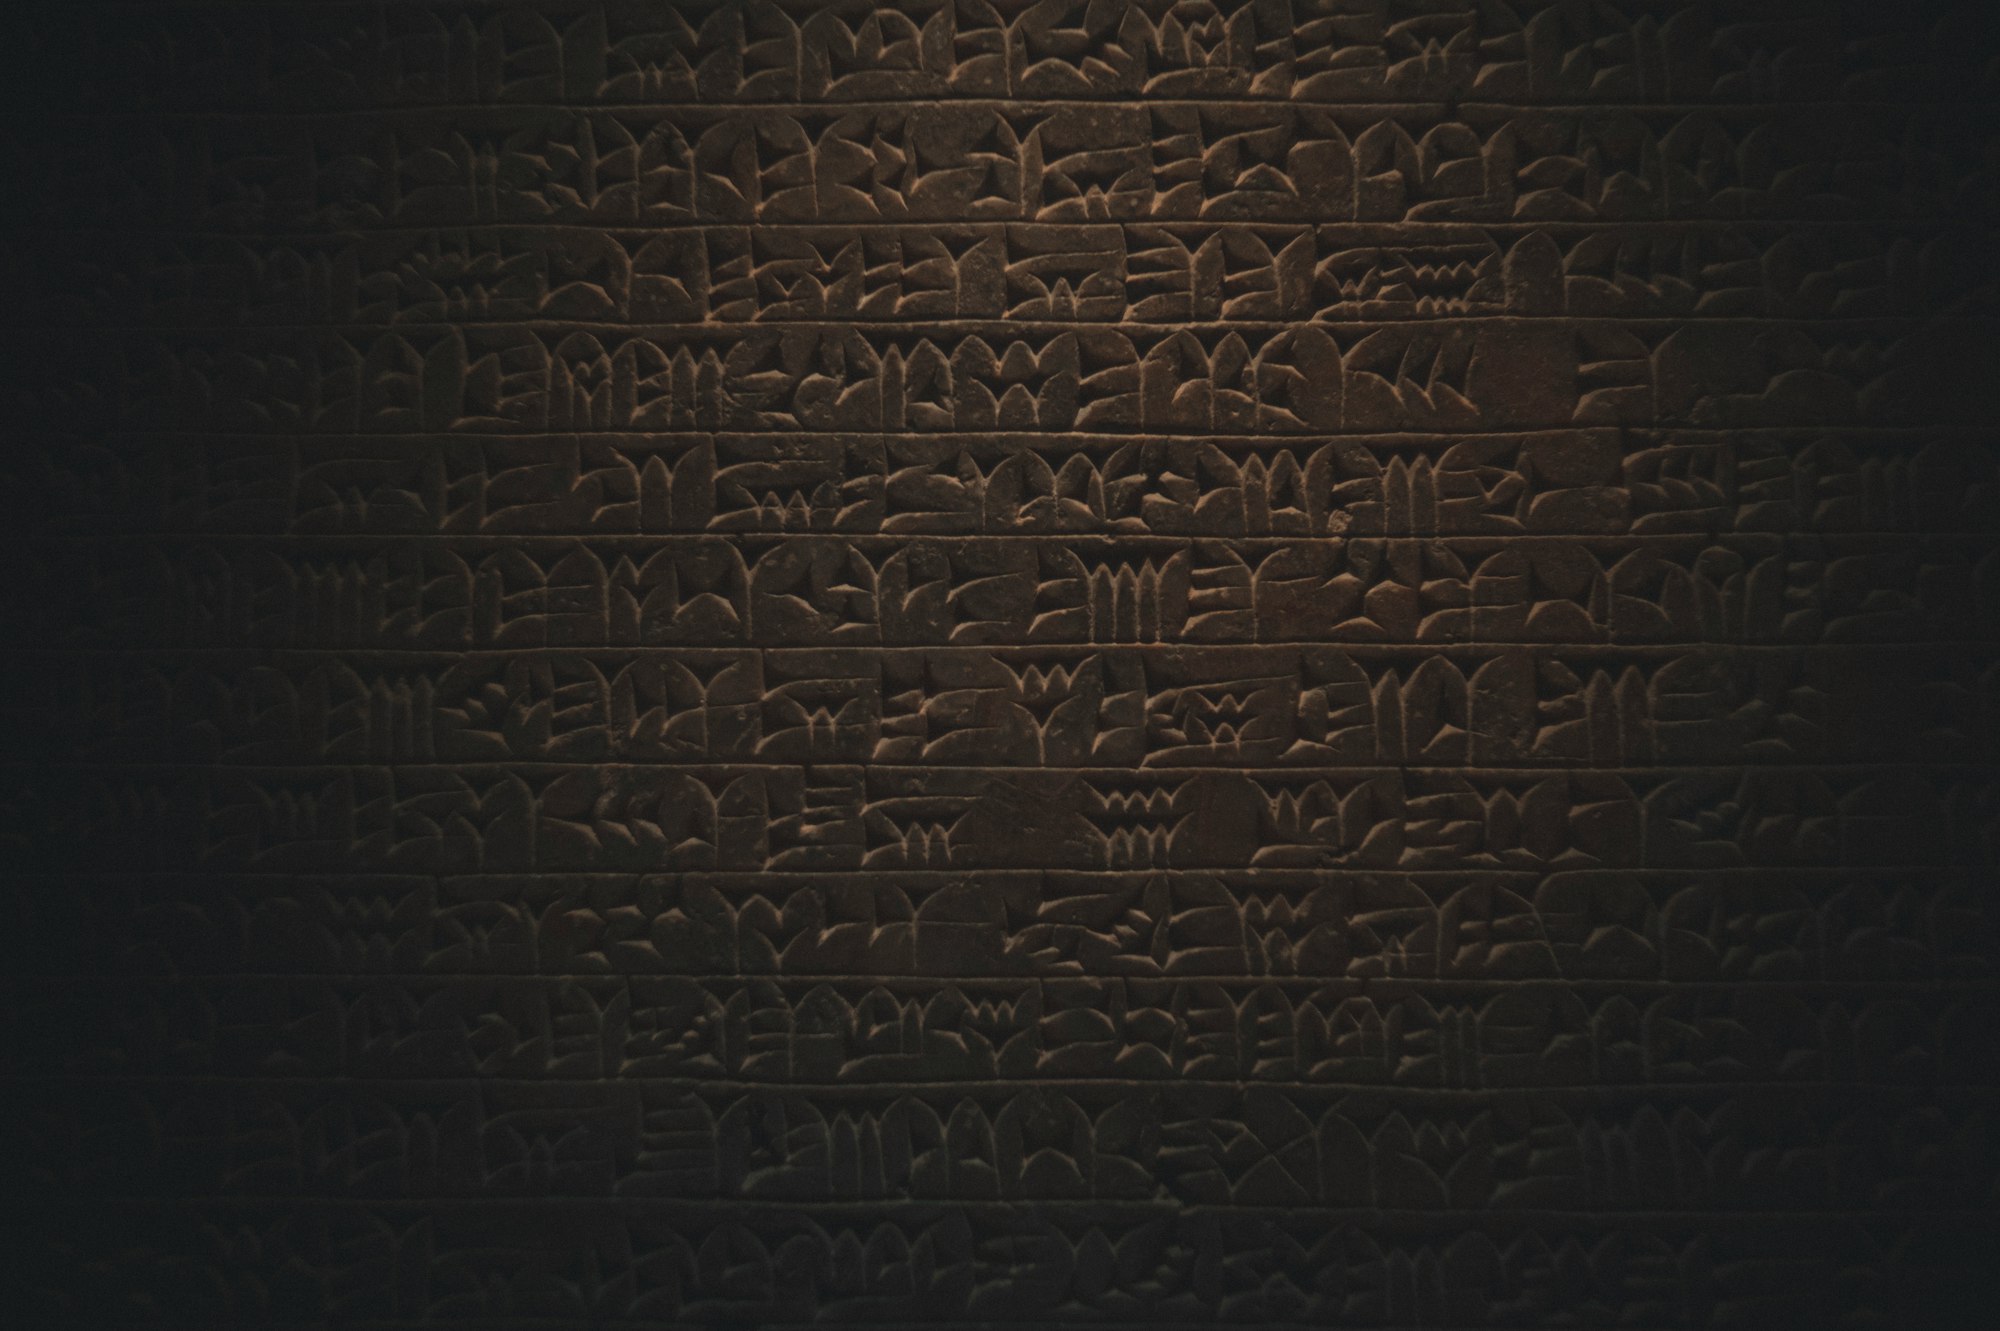 Cuneiform Tablet / Photo by Egor Myznik / Unsplash